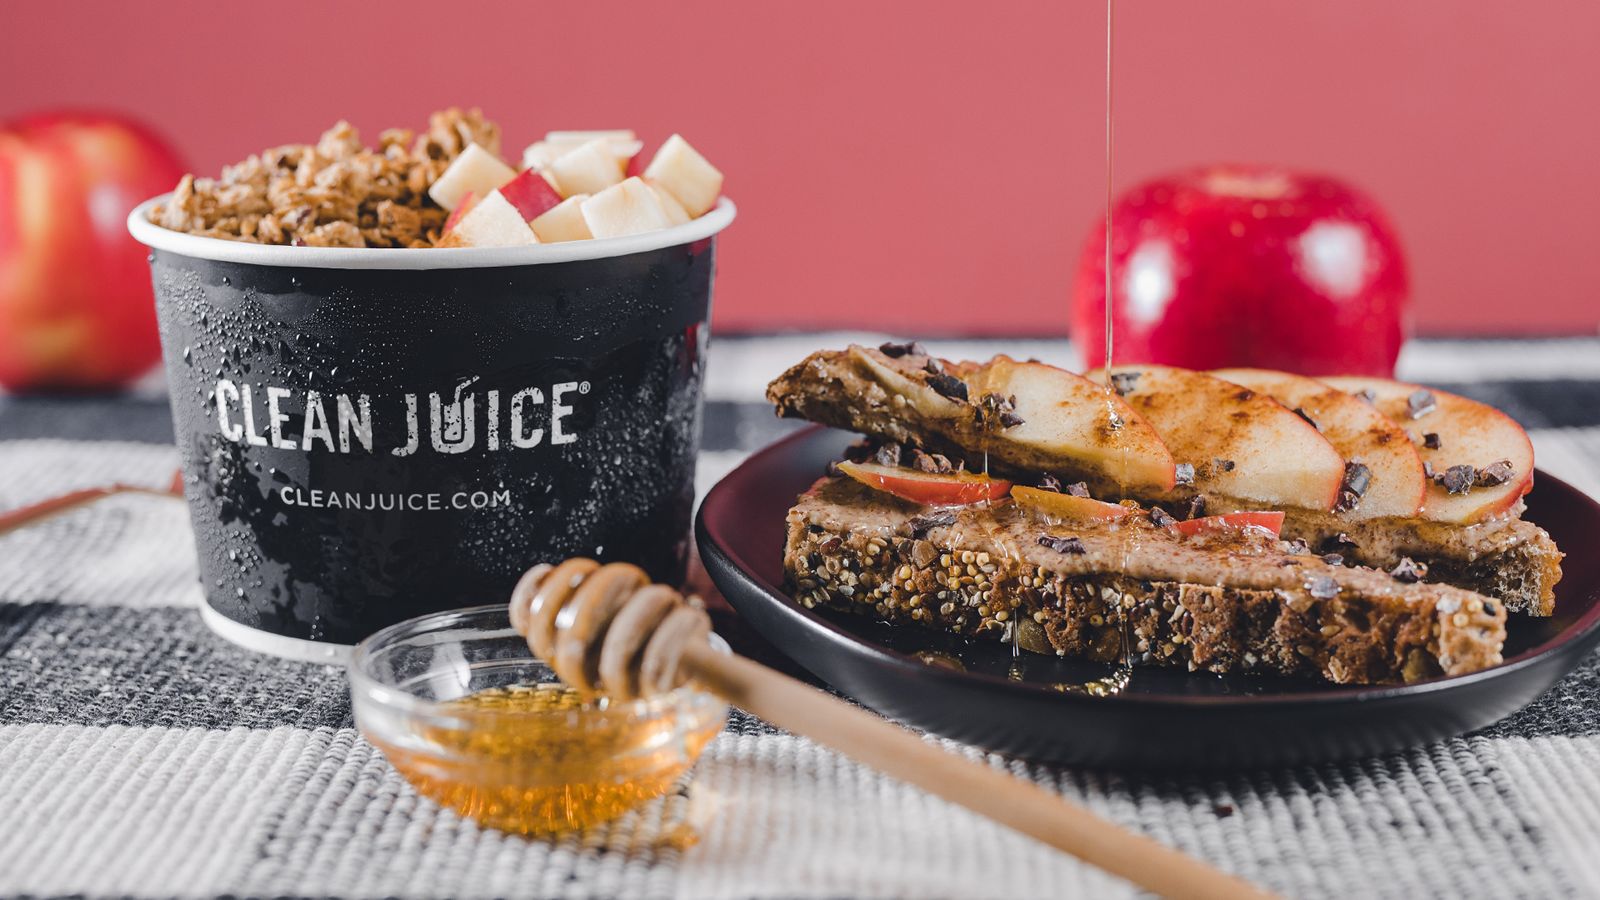 How Do Ya Like Them Apples? Clean Juice Presents Two Tasty Organic Apple Menu Innovations